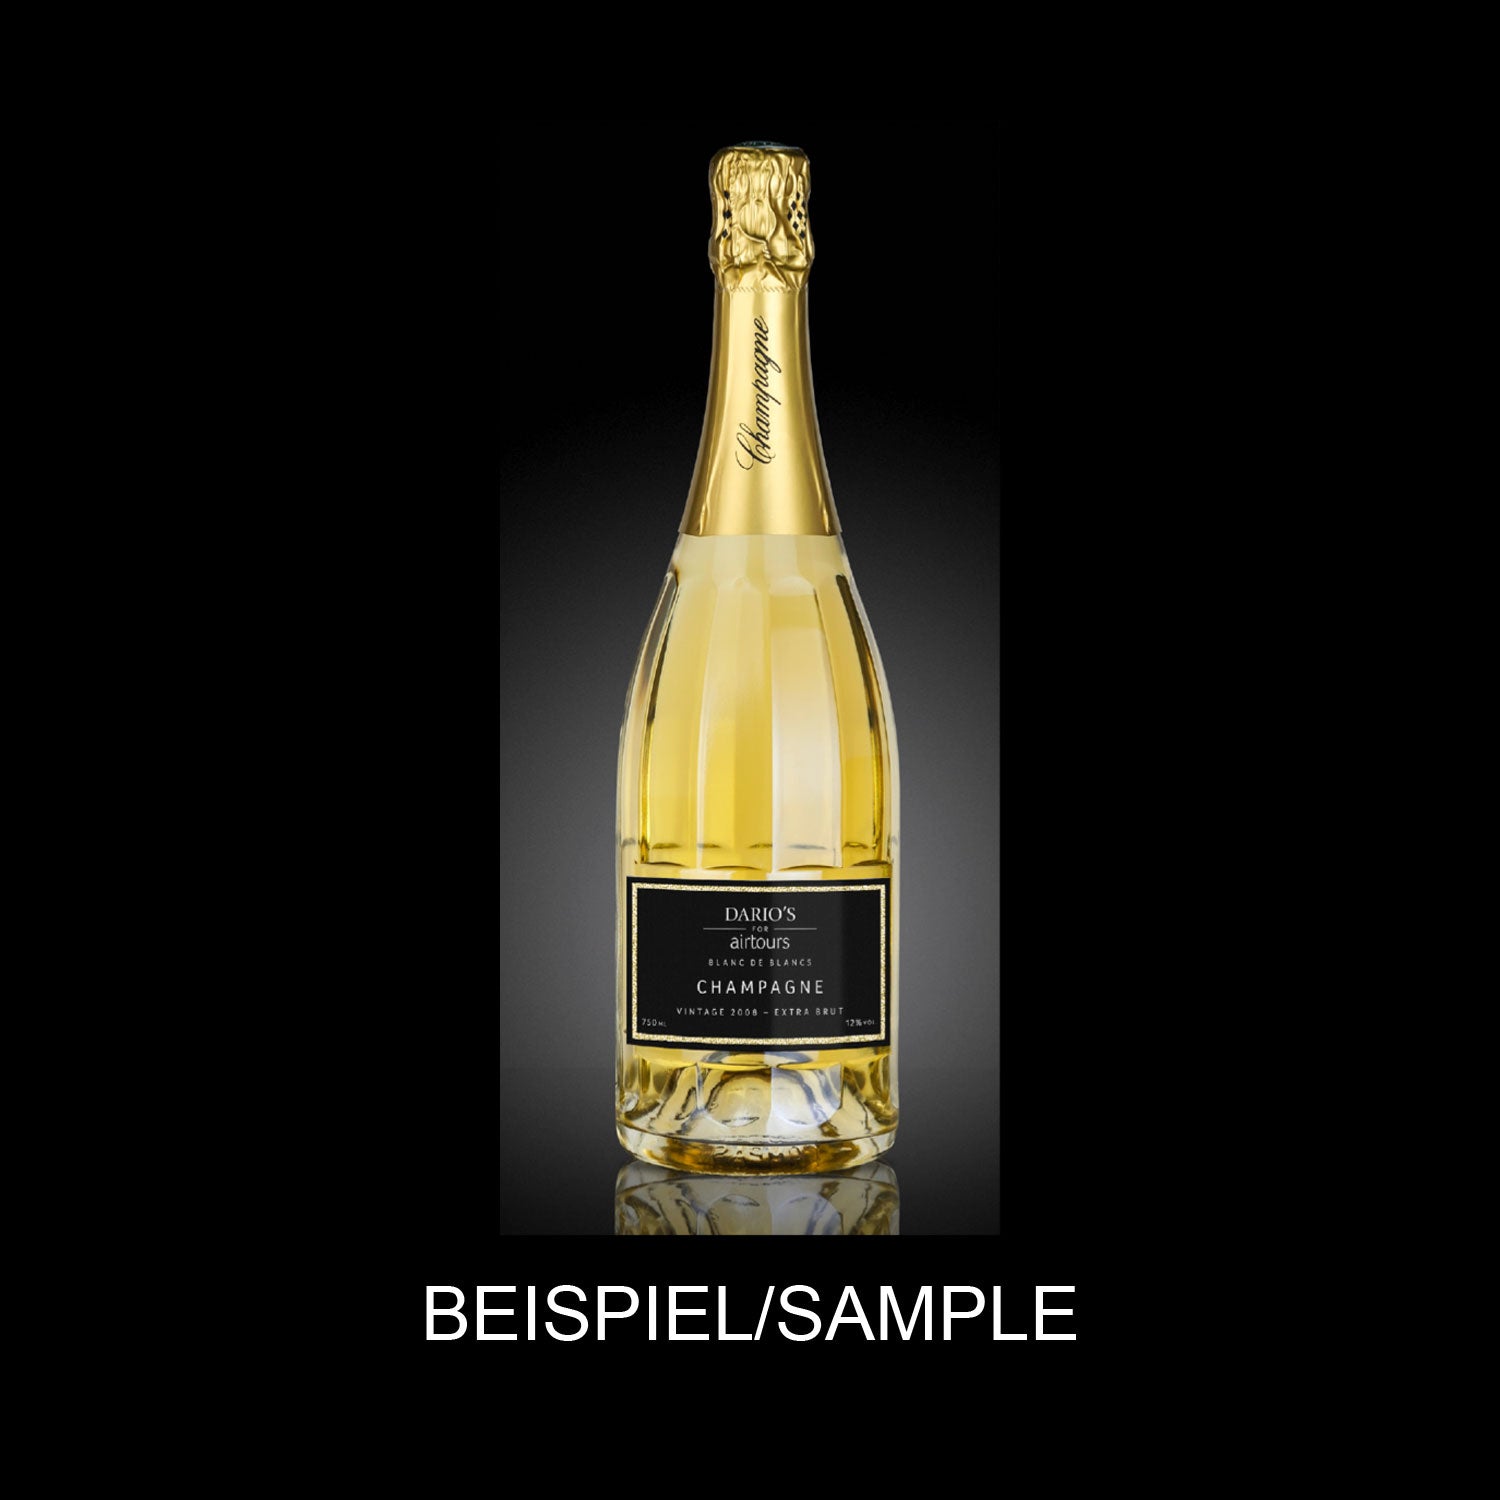 DARIO’S Grande Réserve Brut Champagne 0.75l with your label (18 bottles)